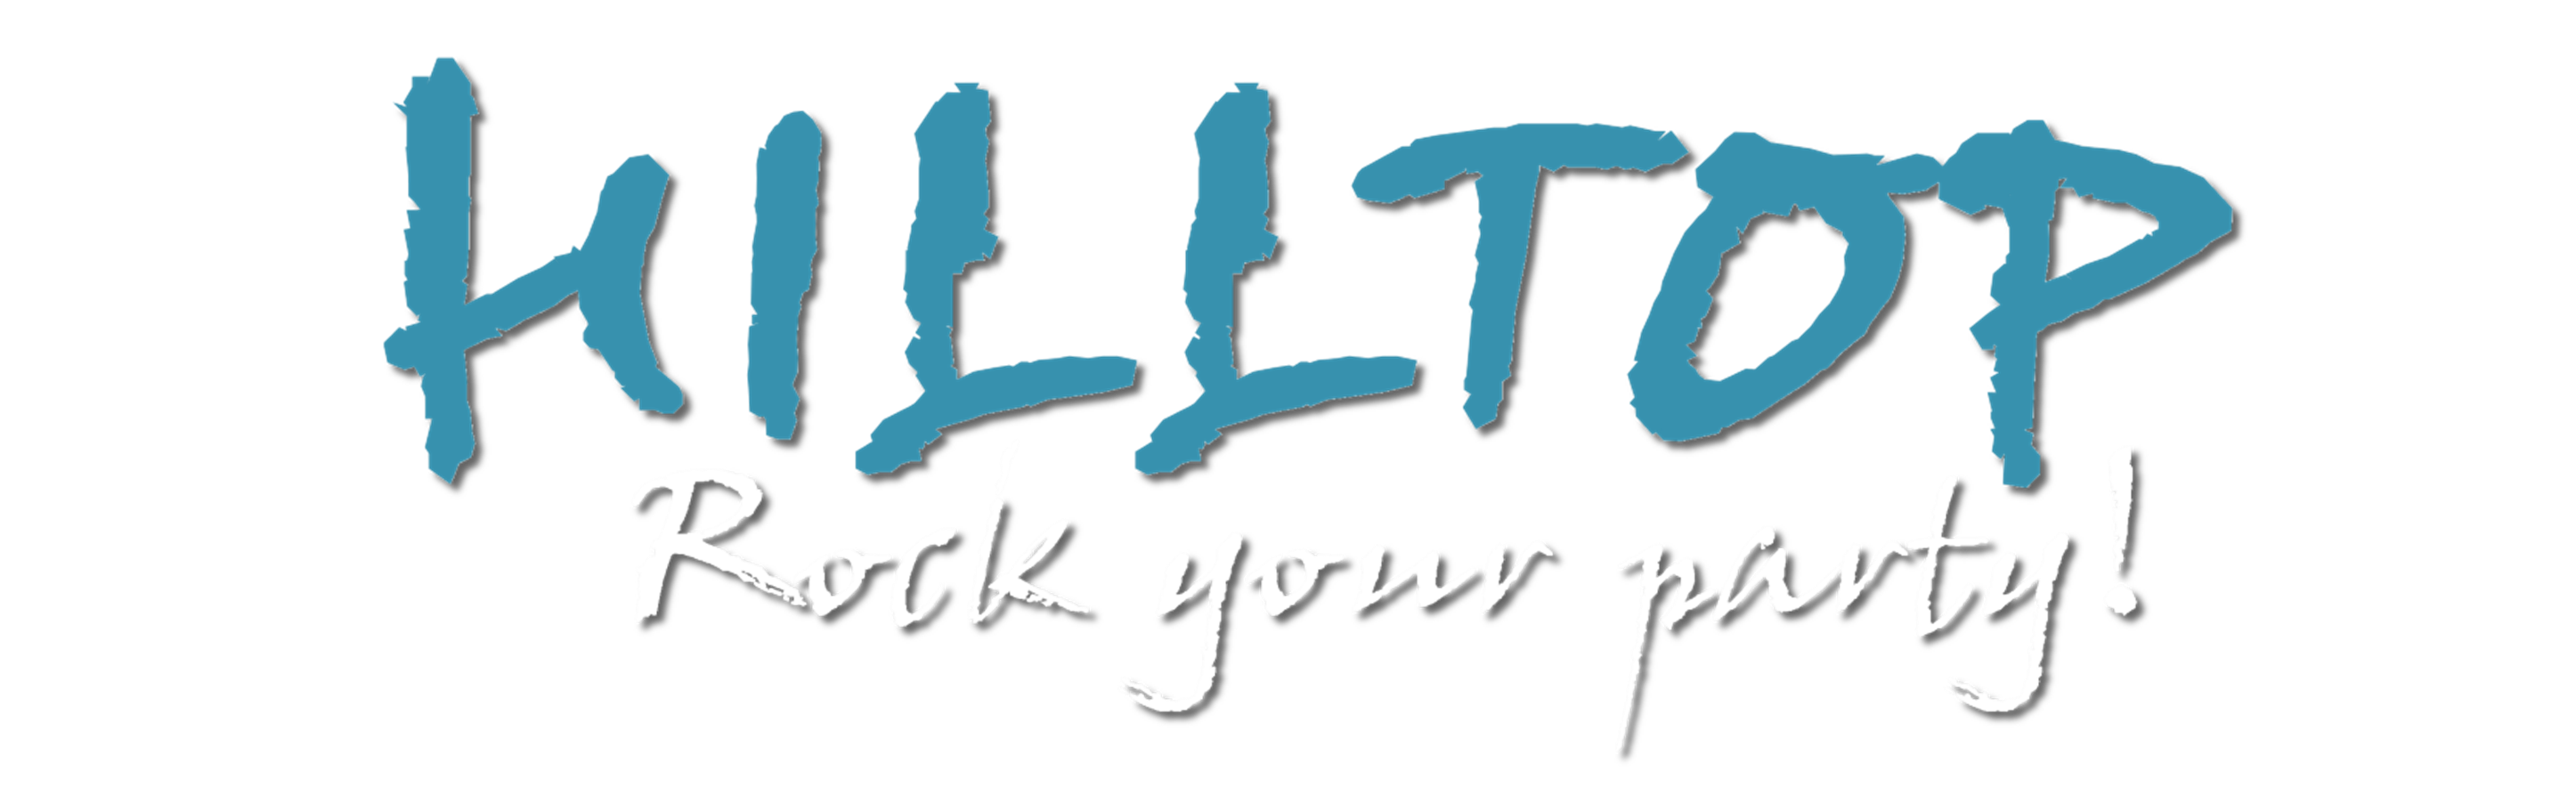 Hilltop logo